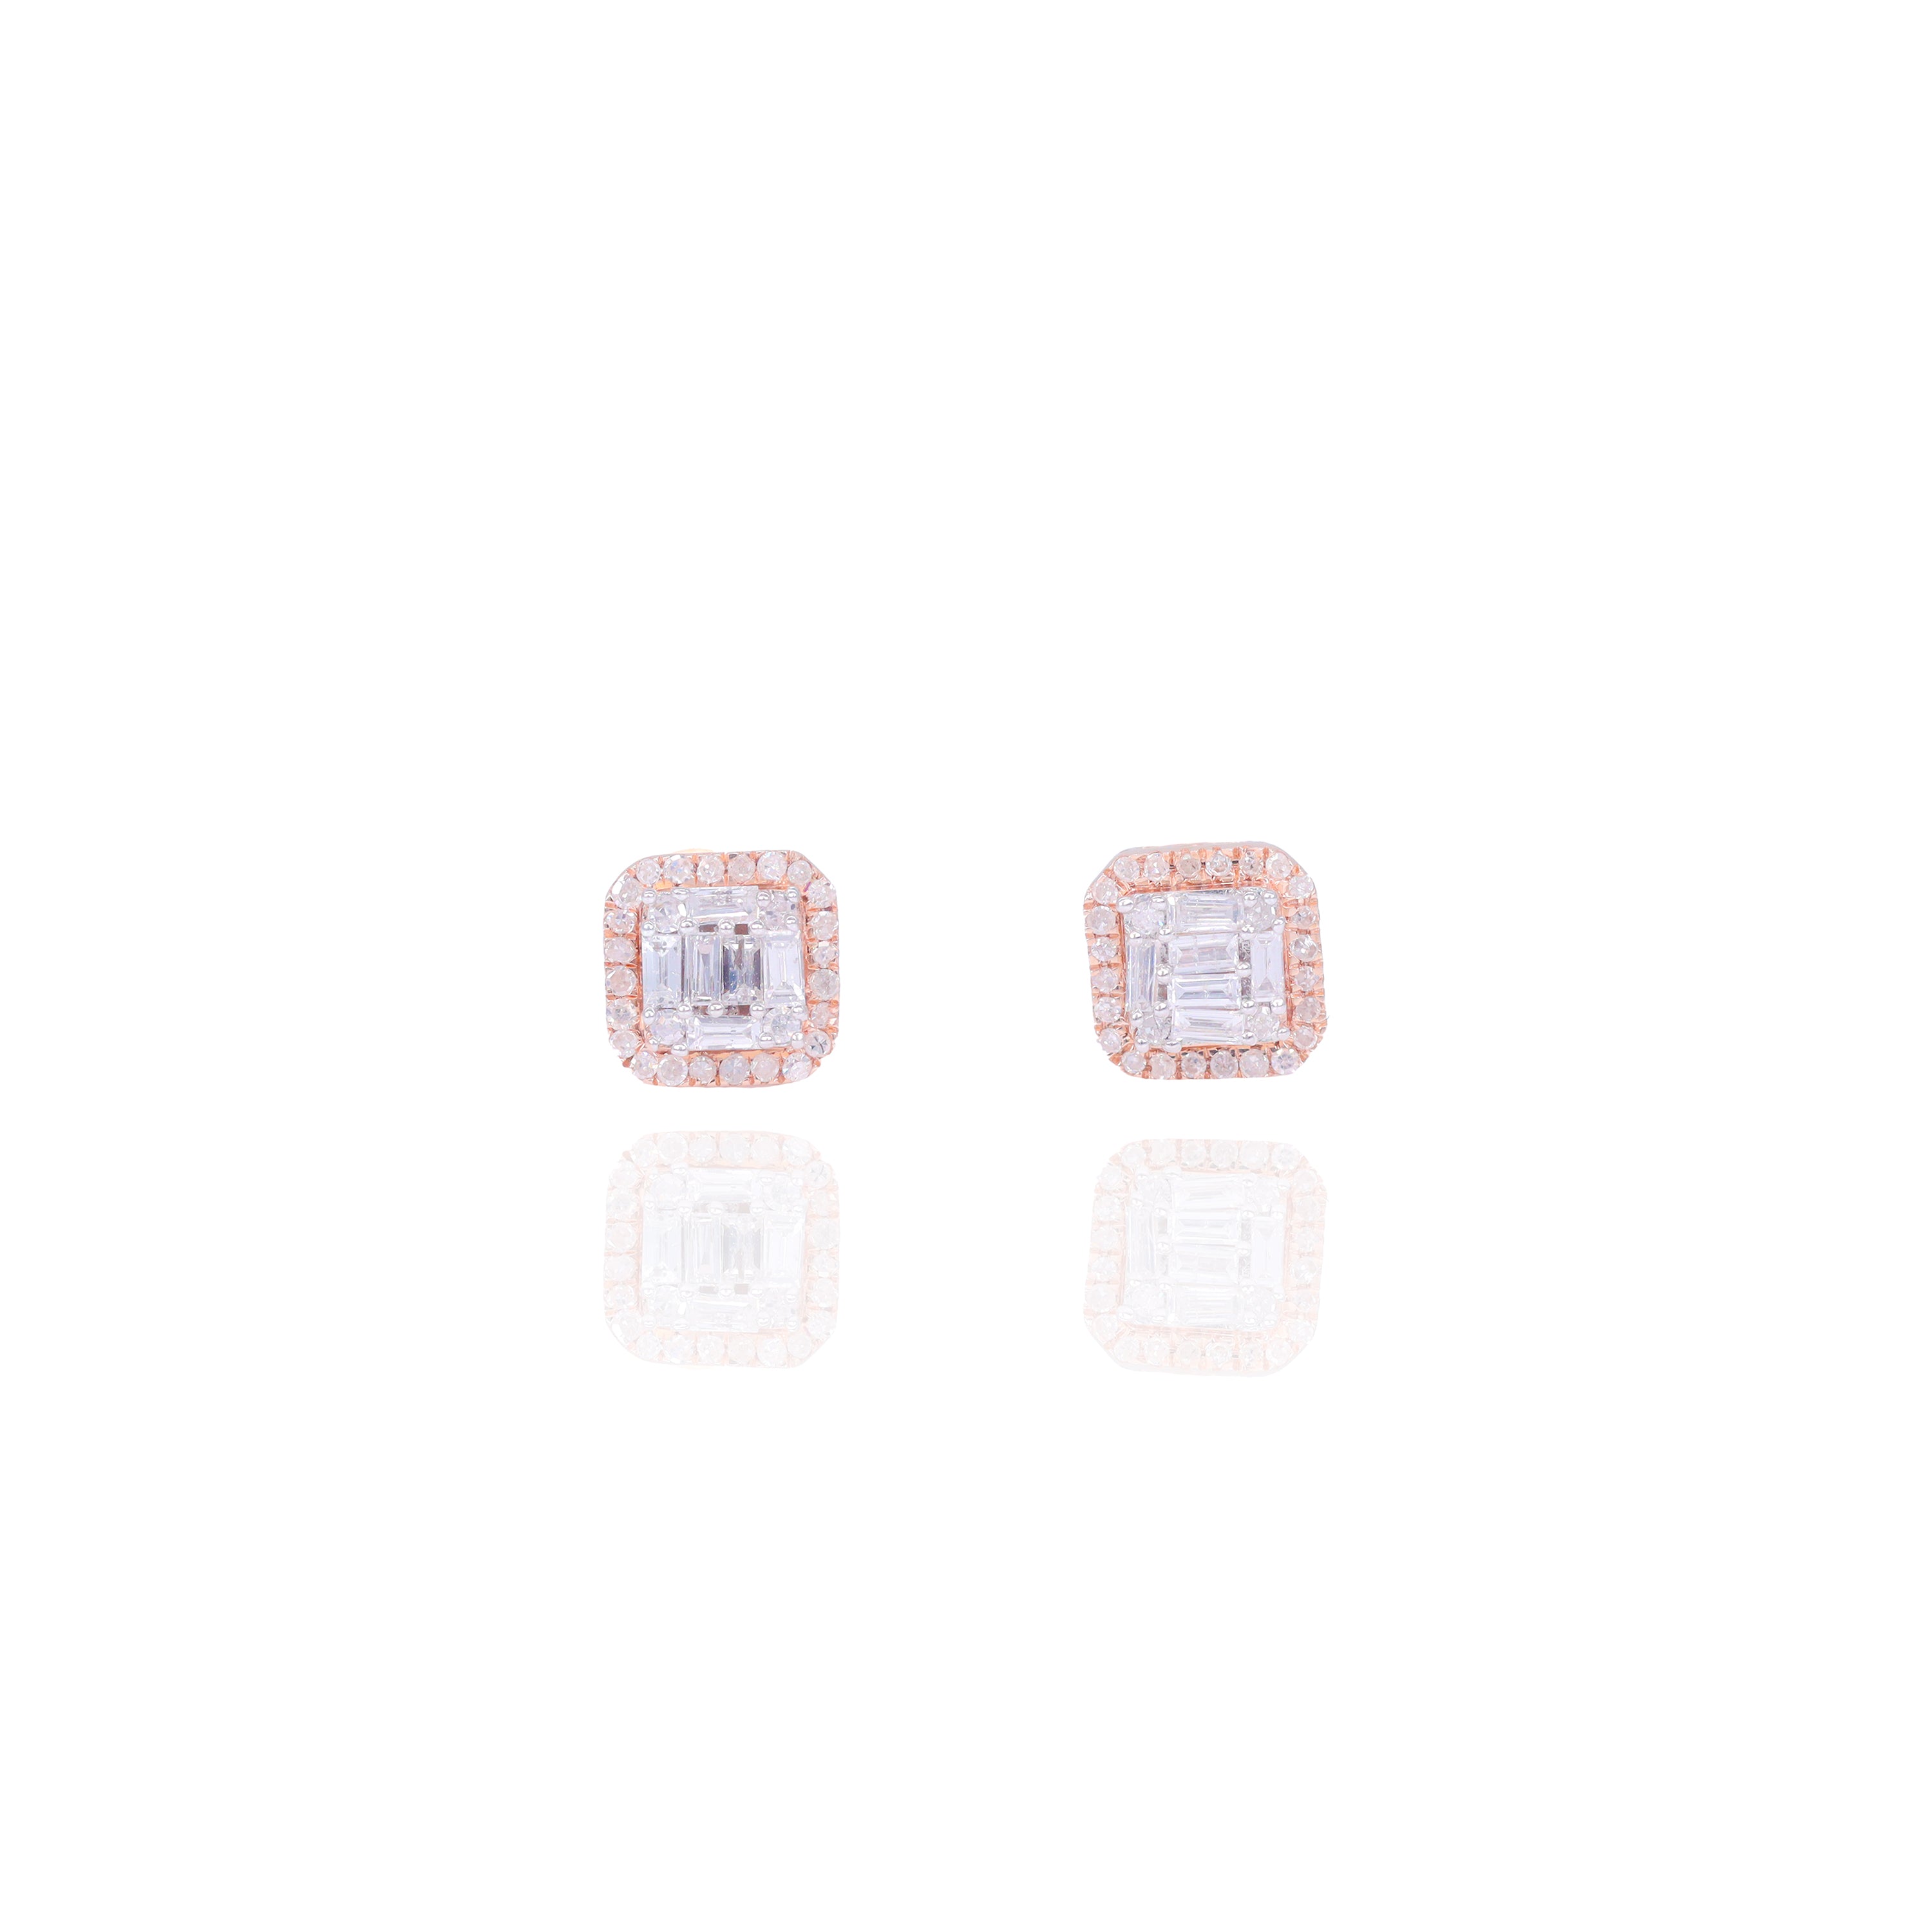 Two-Tone Square Baguette Diamond Earrings